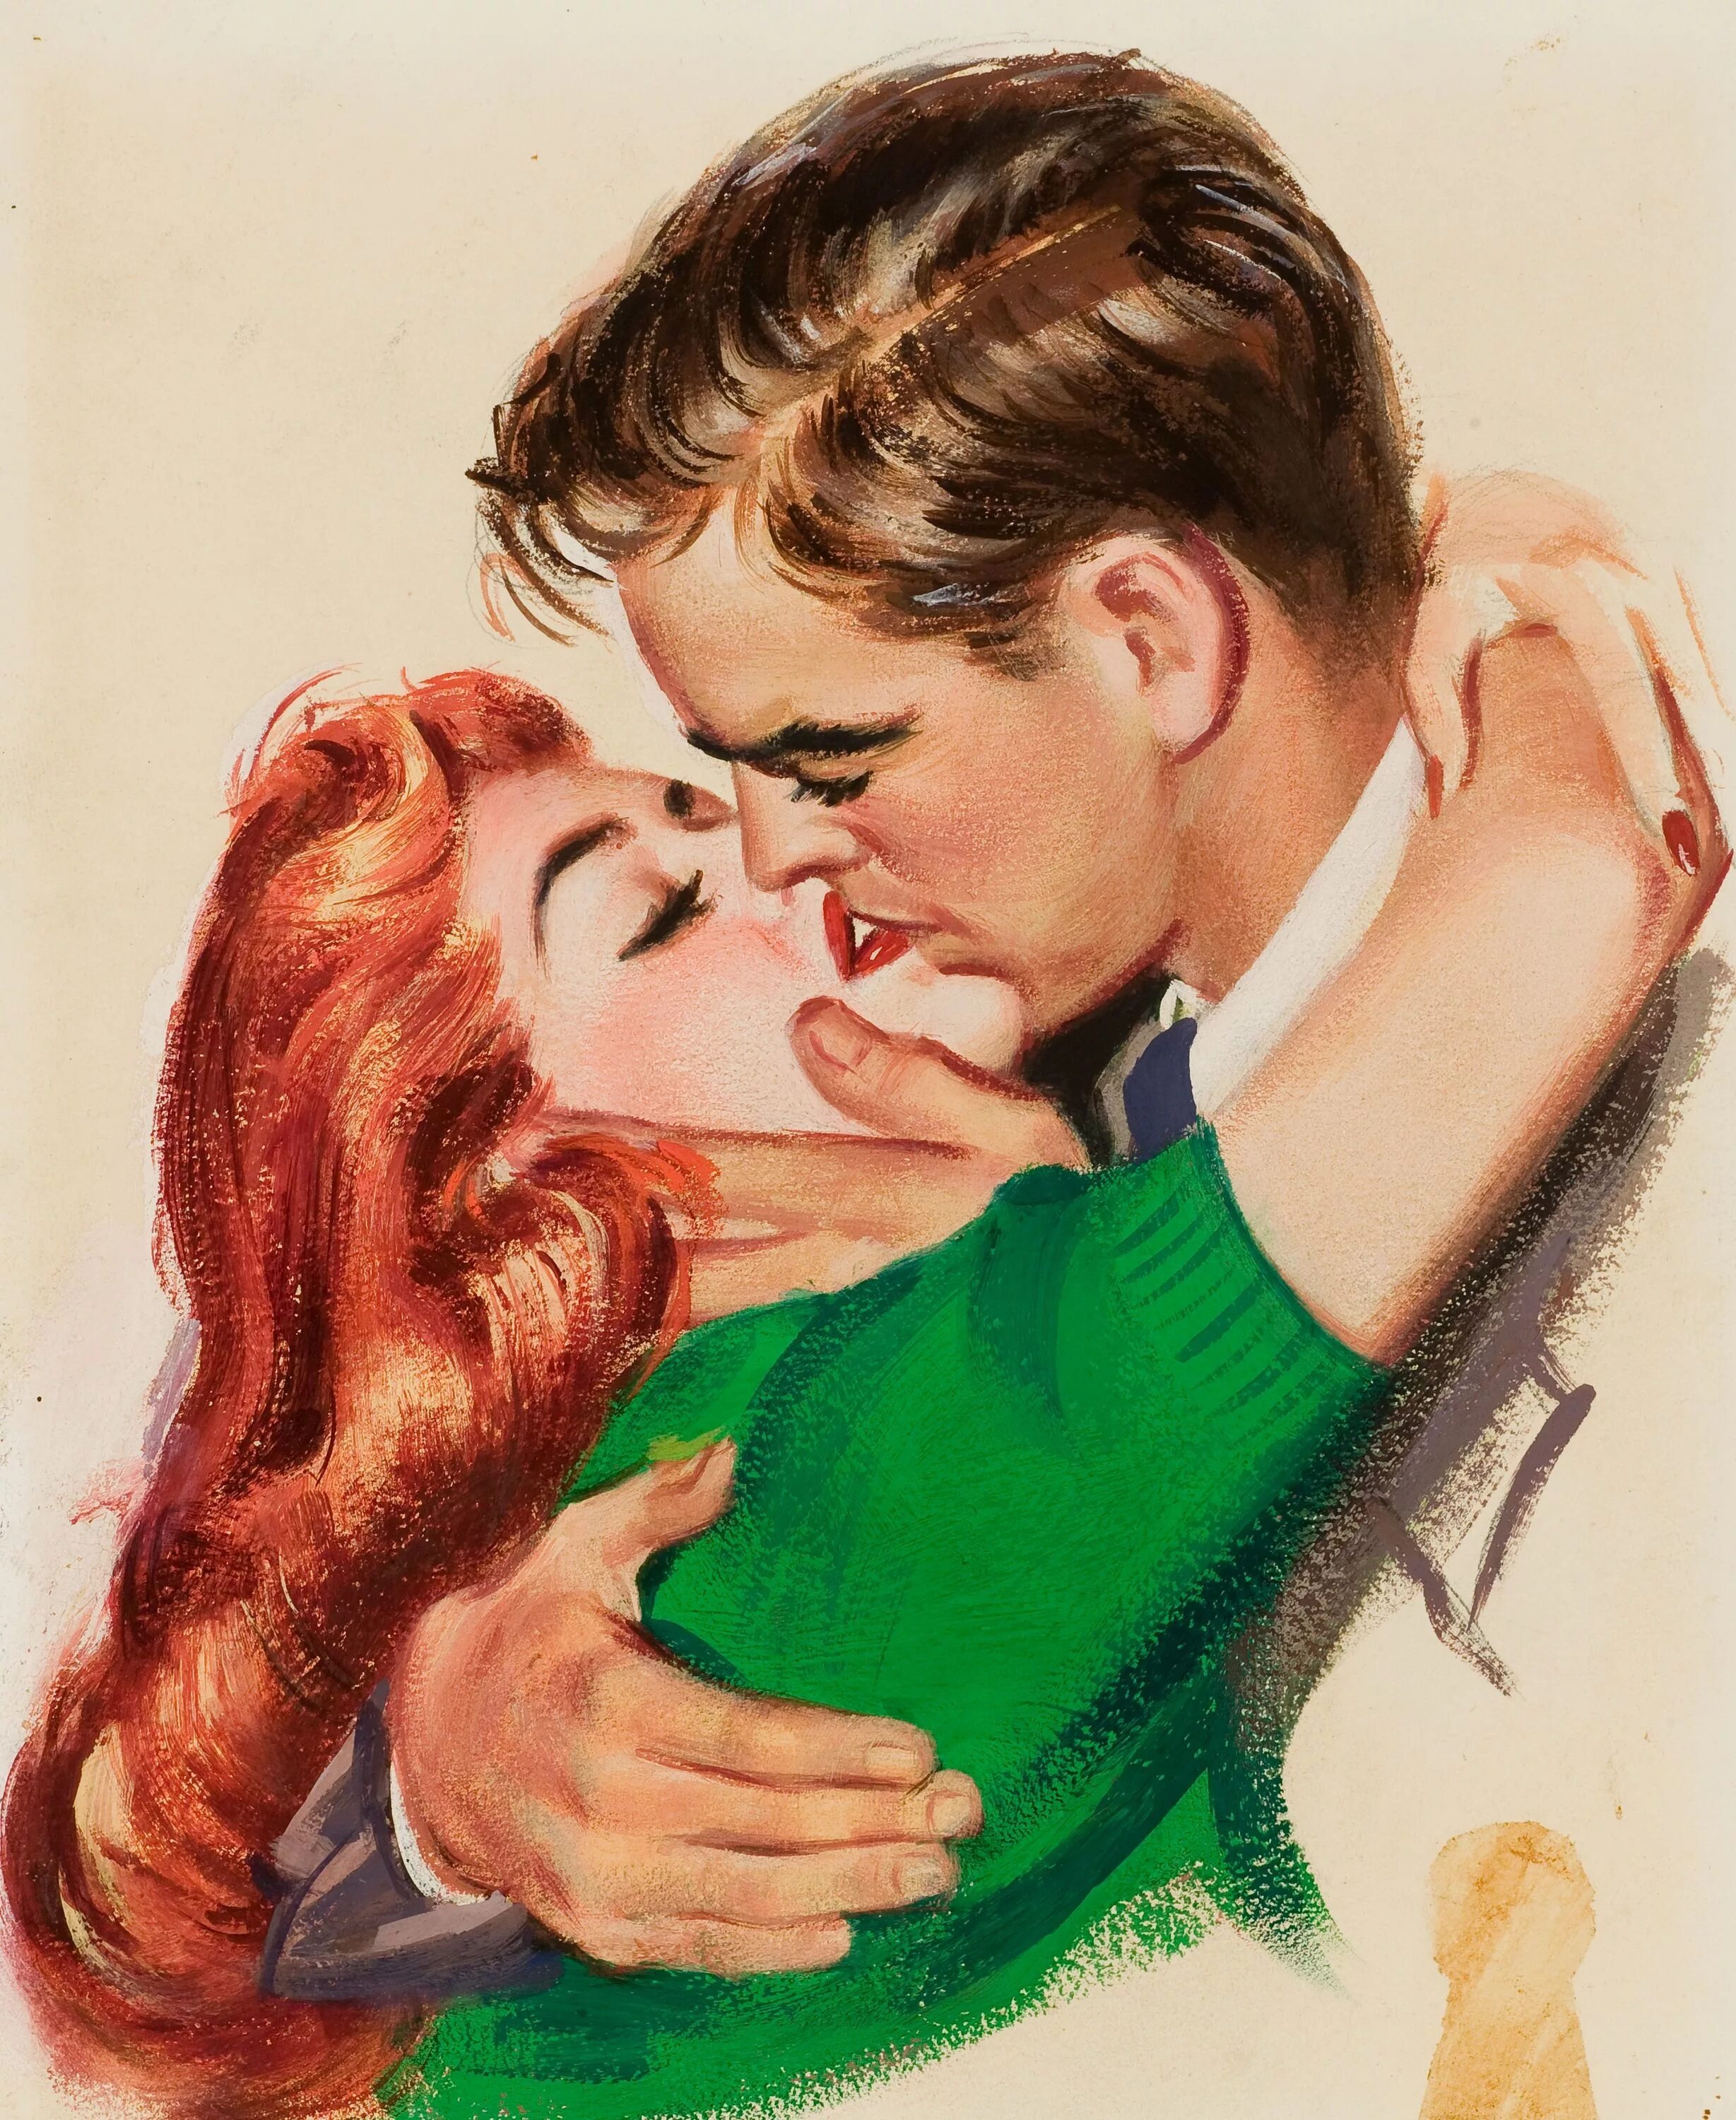 Иллюстратор: Джон Уиткомб. Джон Уиткомб картины. Джон Уиткомб иллюстрации. Пин ап мужчина и женщина. Мужчина целует жену